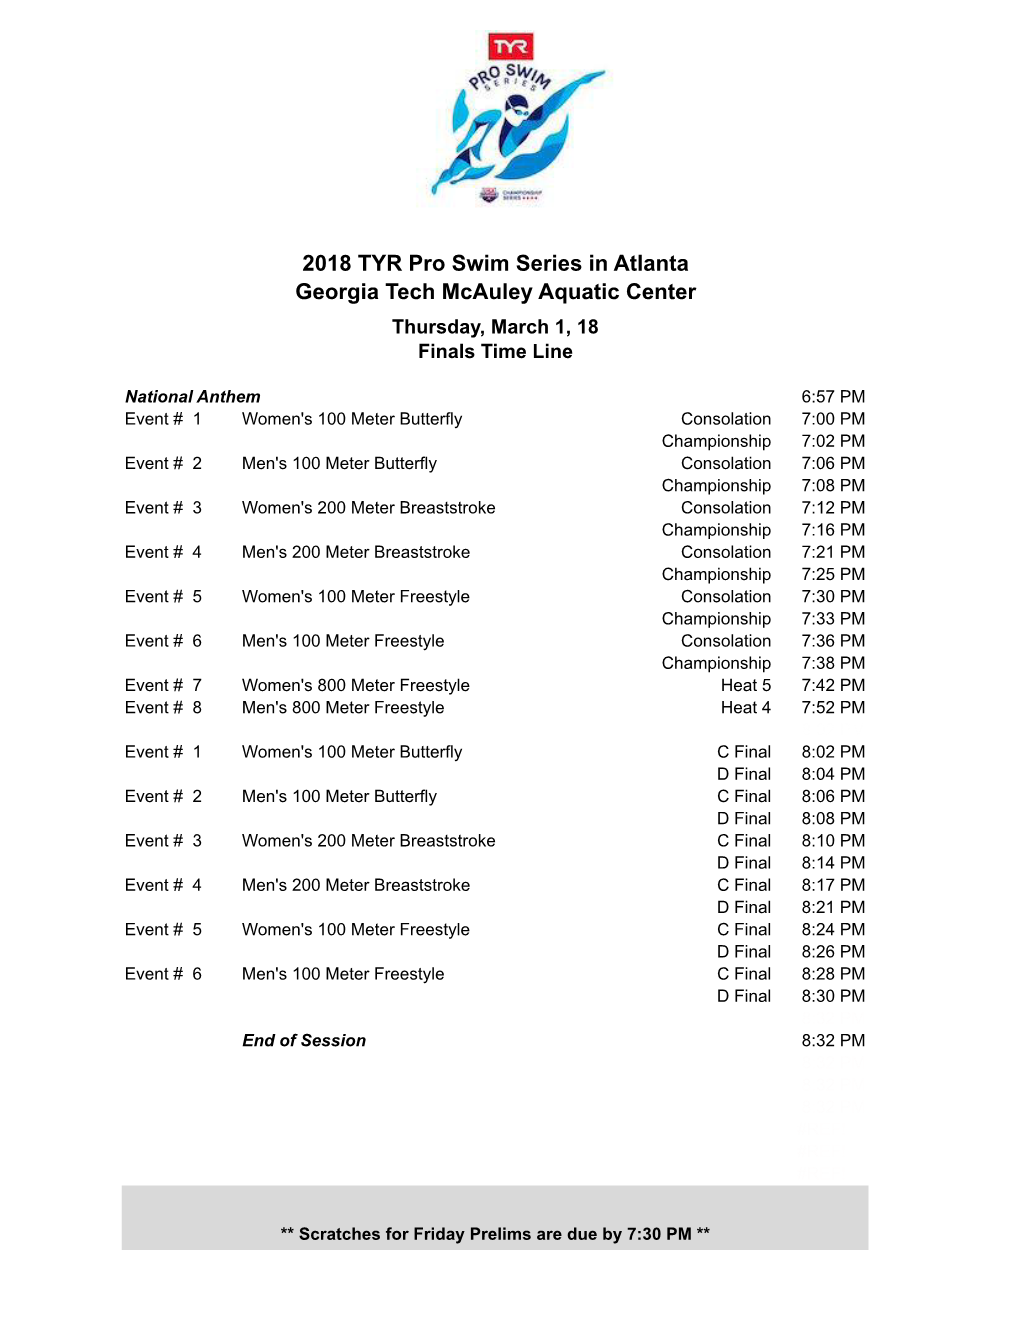 2018 TYR Pro Swim Series in Atlanta Georgia Tech Mcauley Aquatic Center Thursday, March 1, 18 Finals Time Line